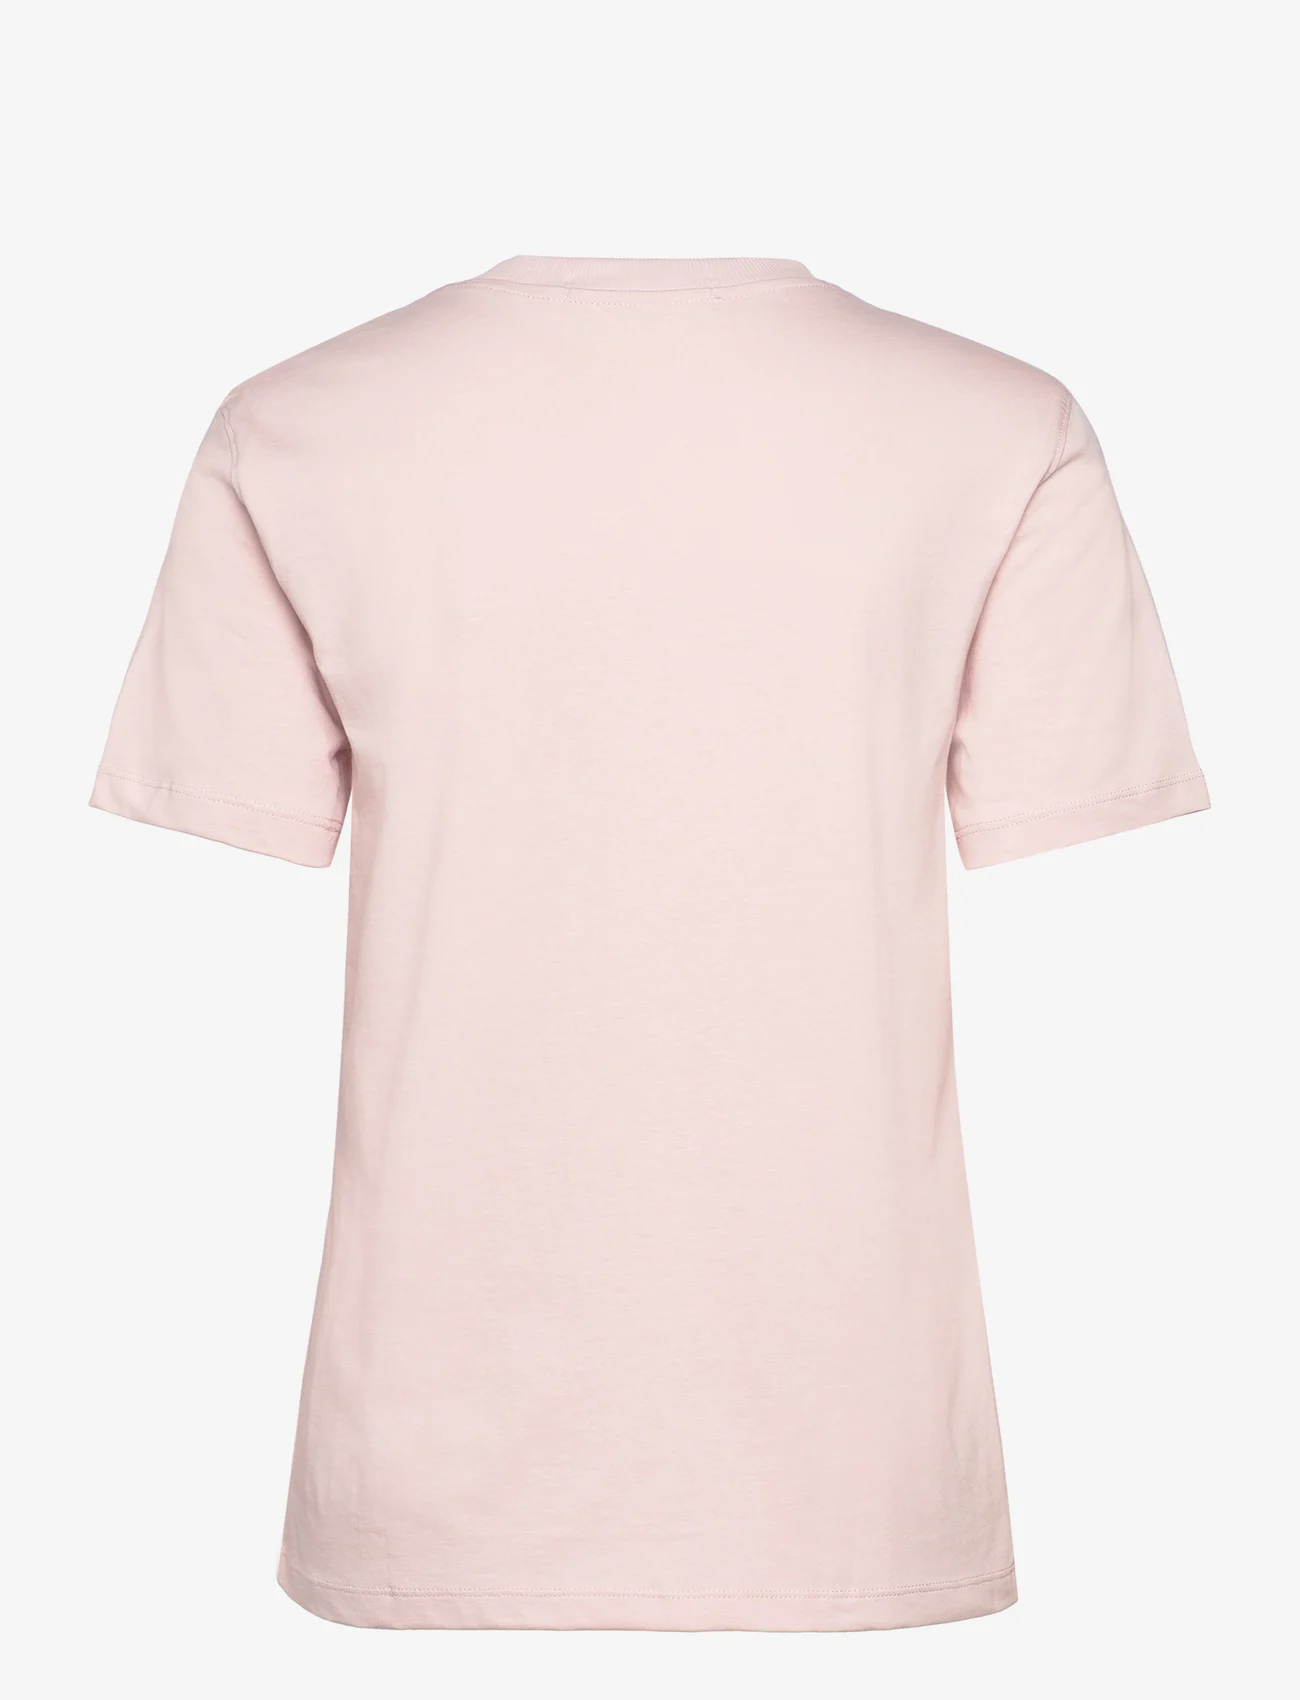 Calvin Klein Jeans - CK EMBRO BADGE REGULAR TEE - t-skjorter - sepia rose - 1